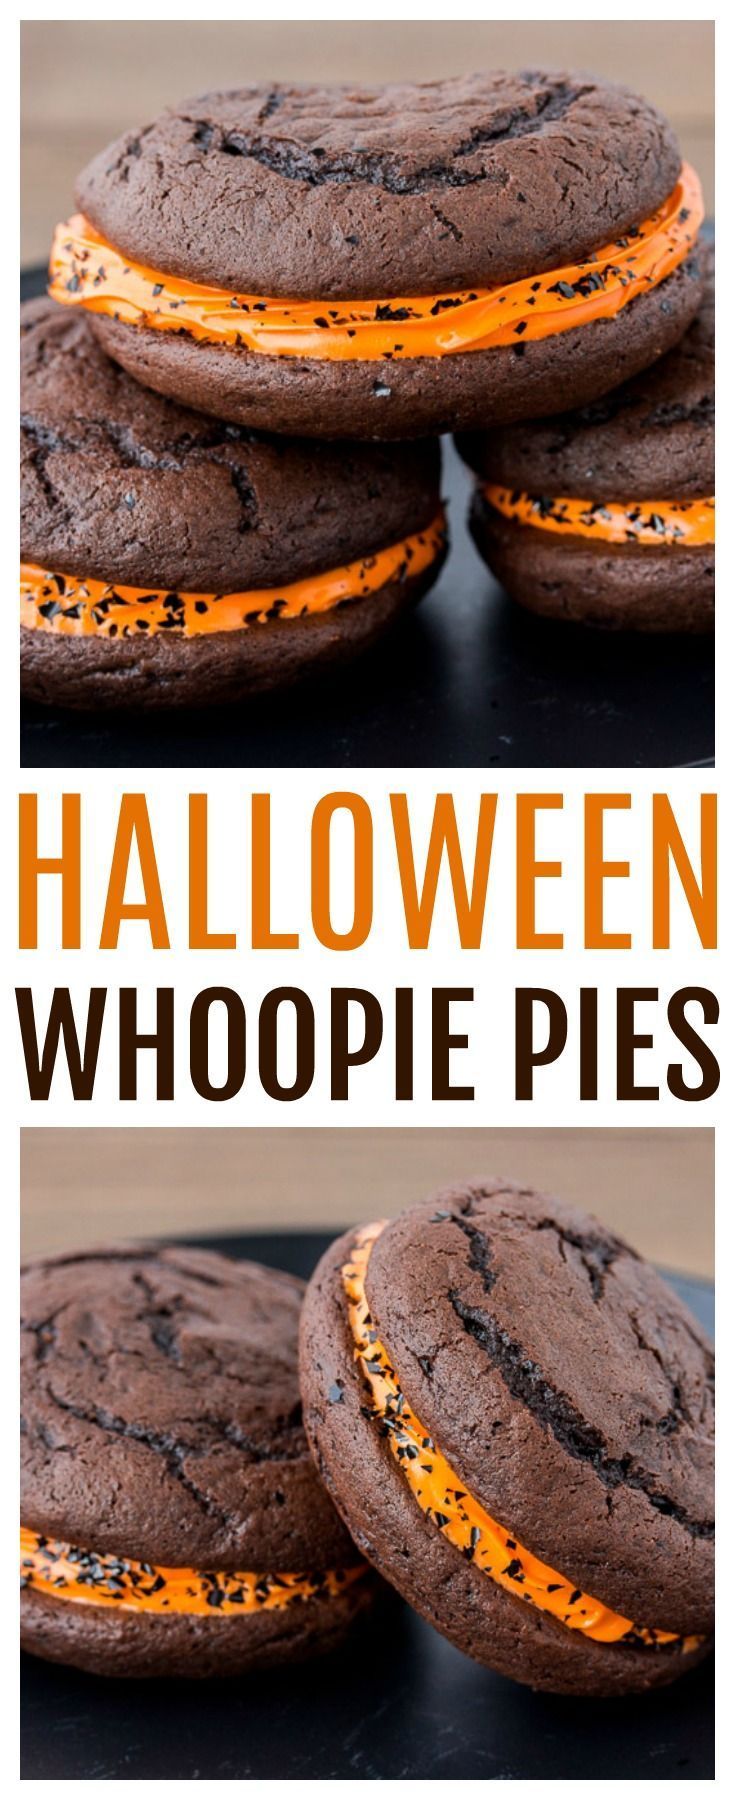 23 halloween cookie recipes
 ideas